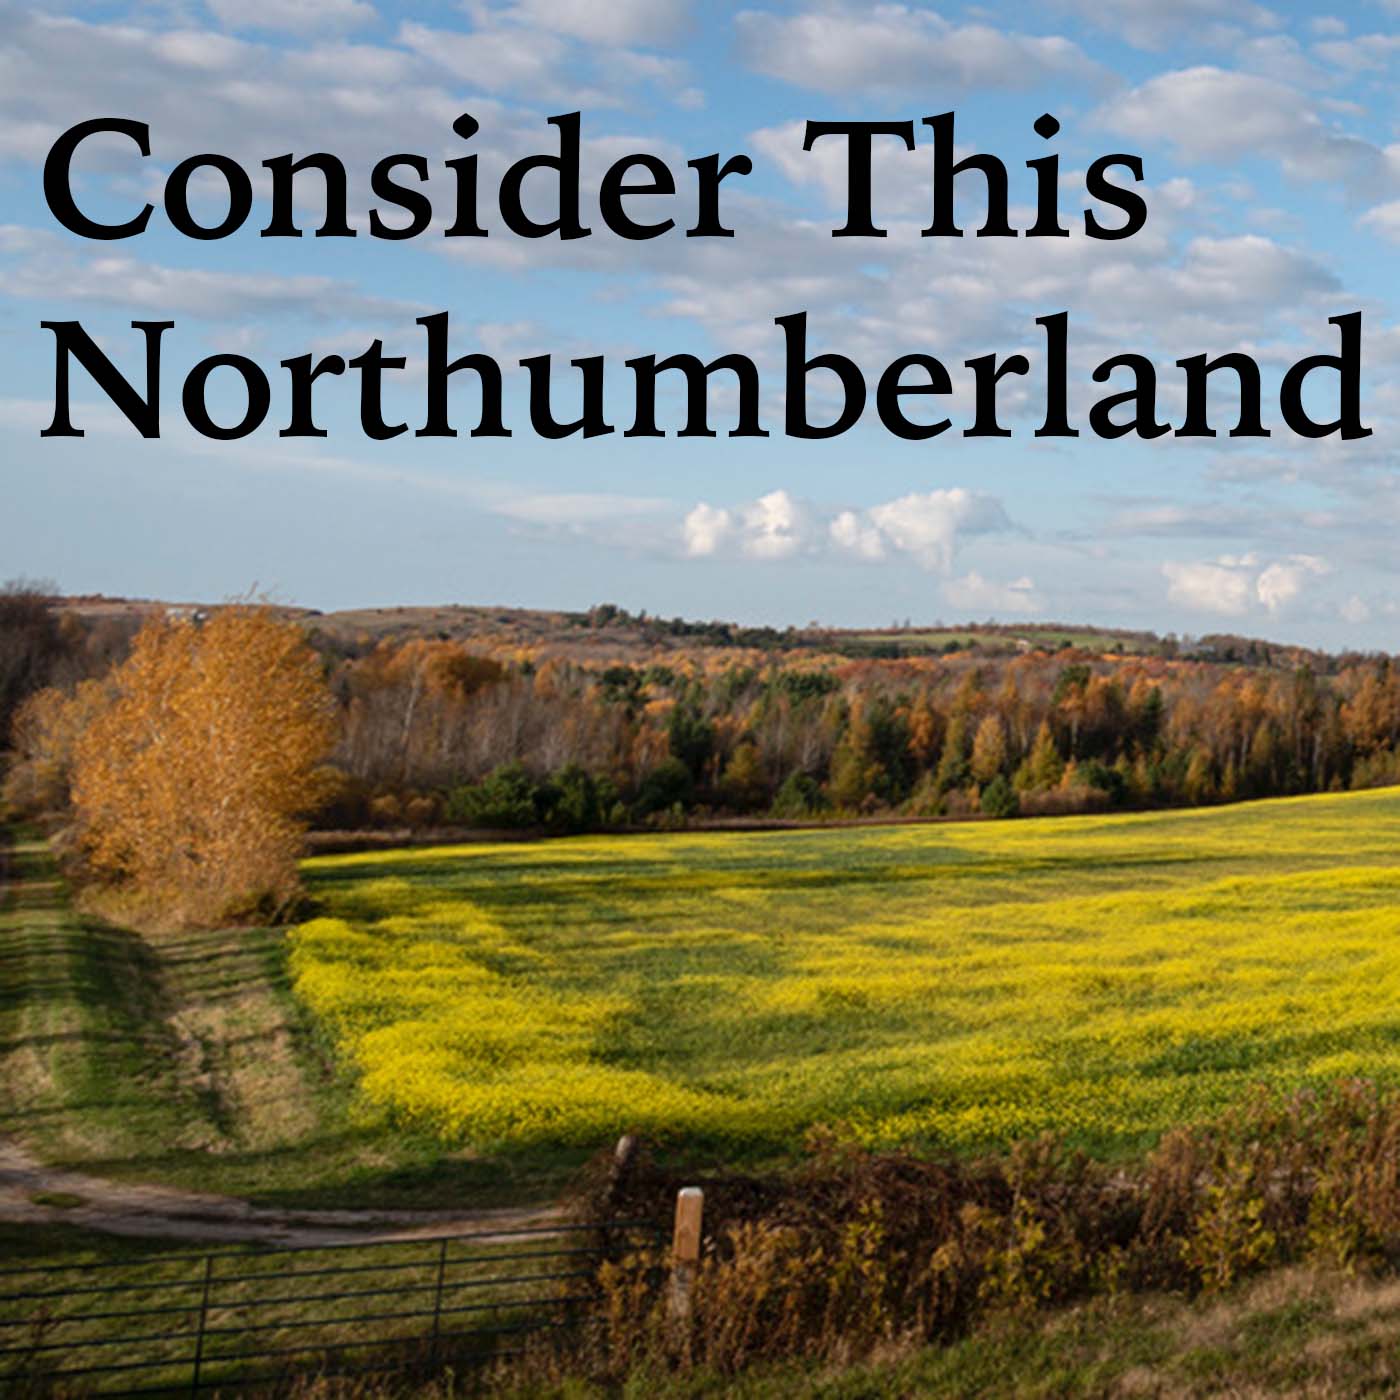 Consider This Northumberland